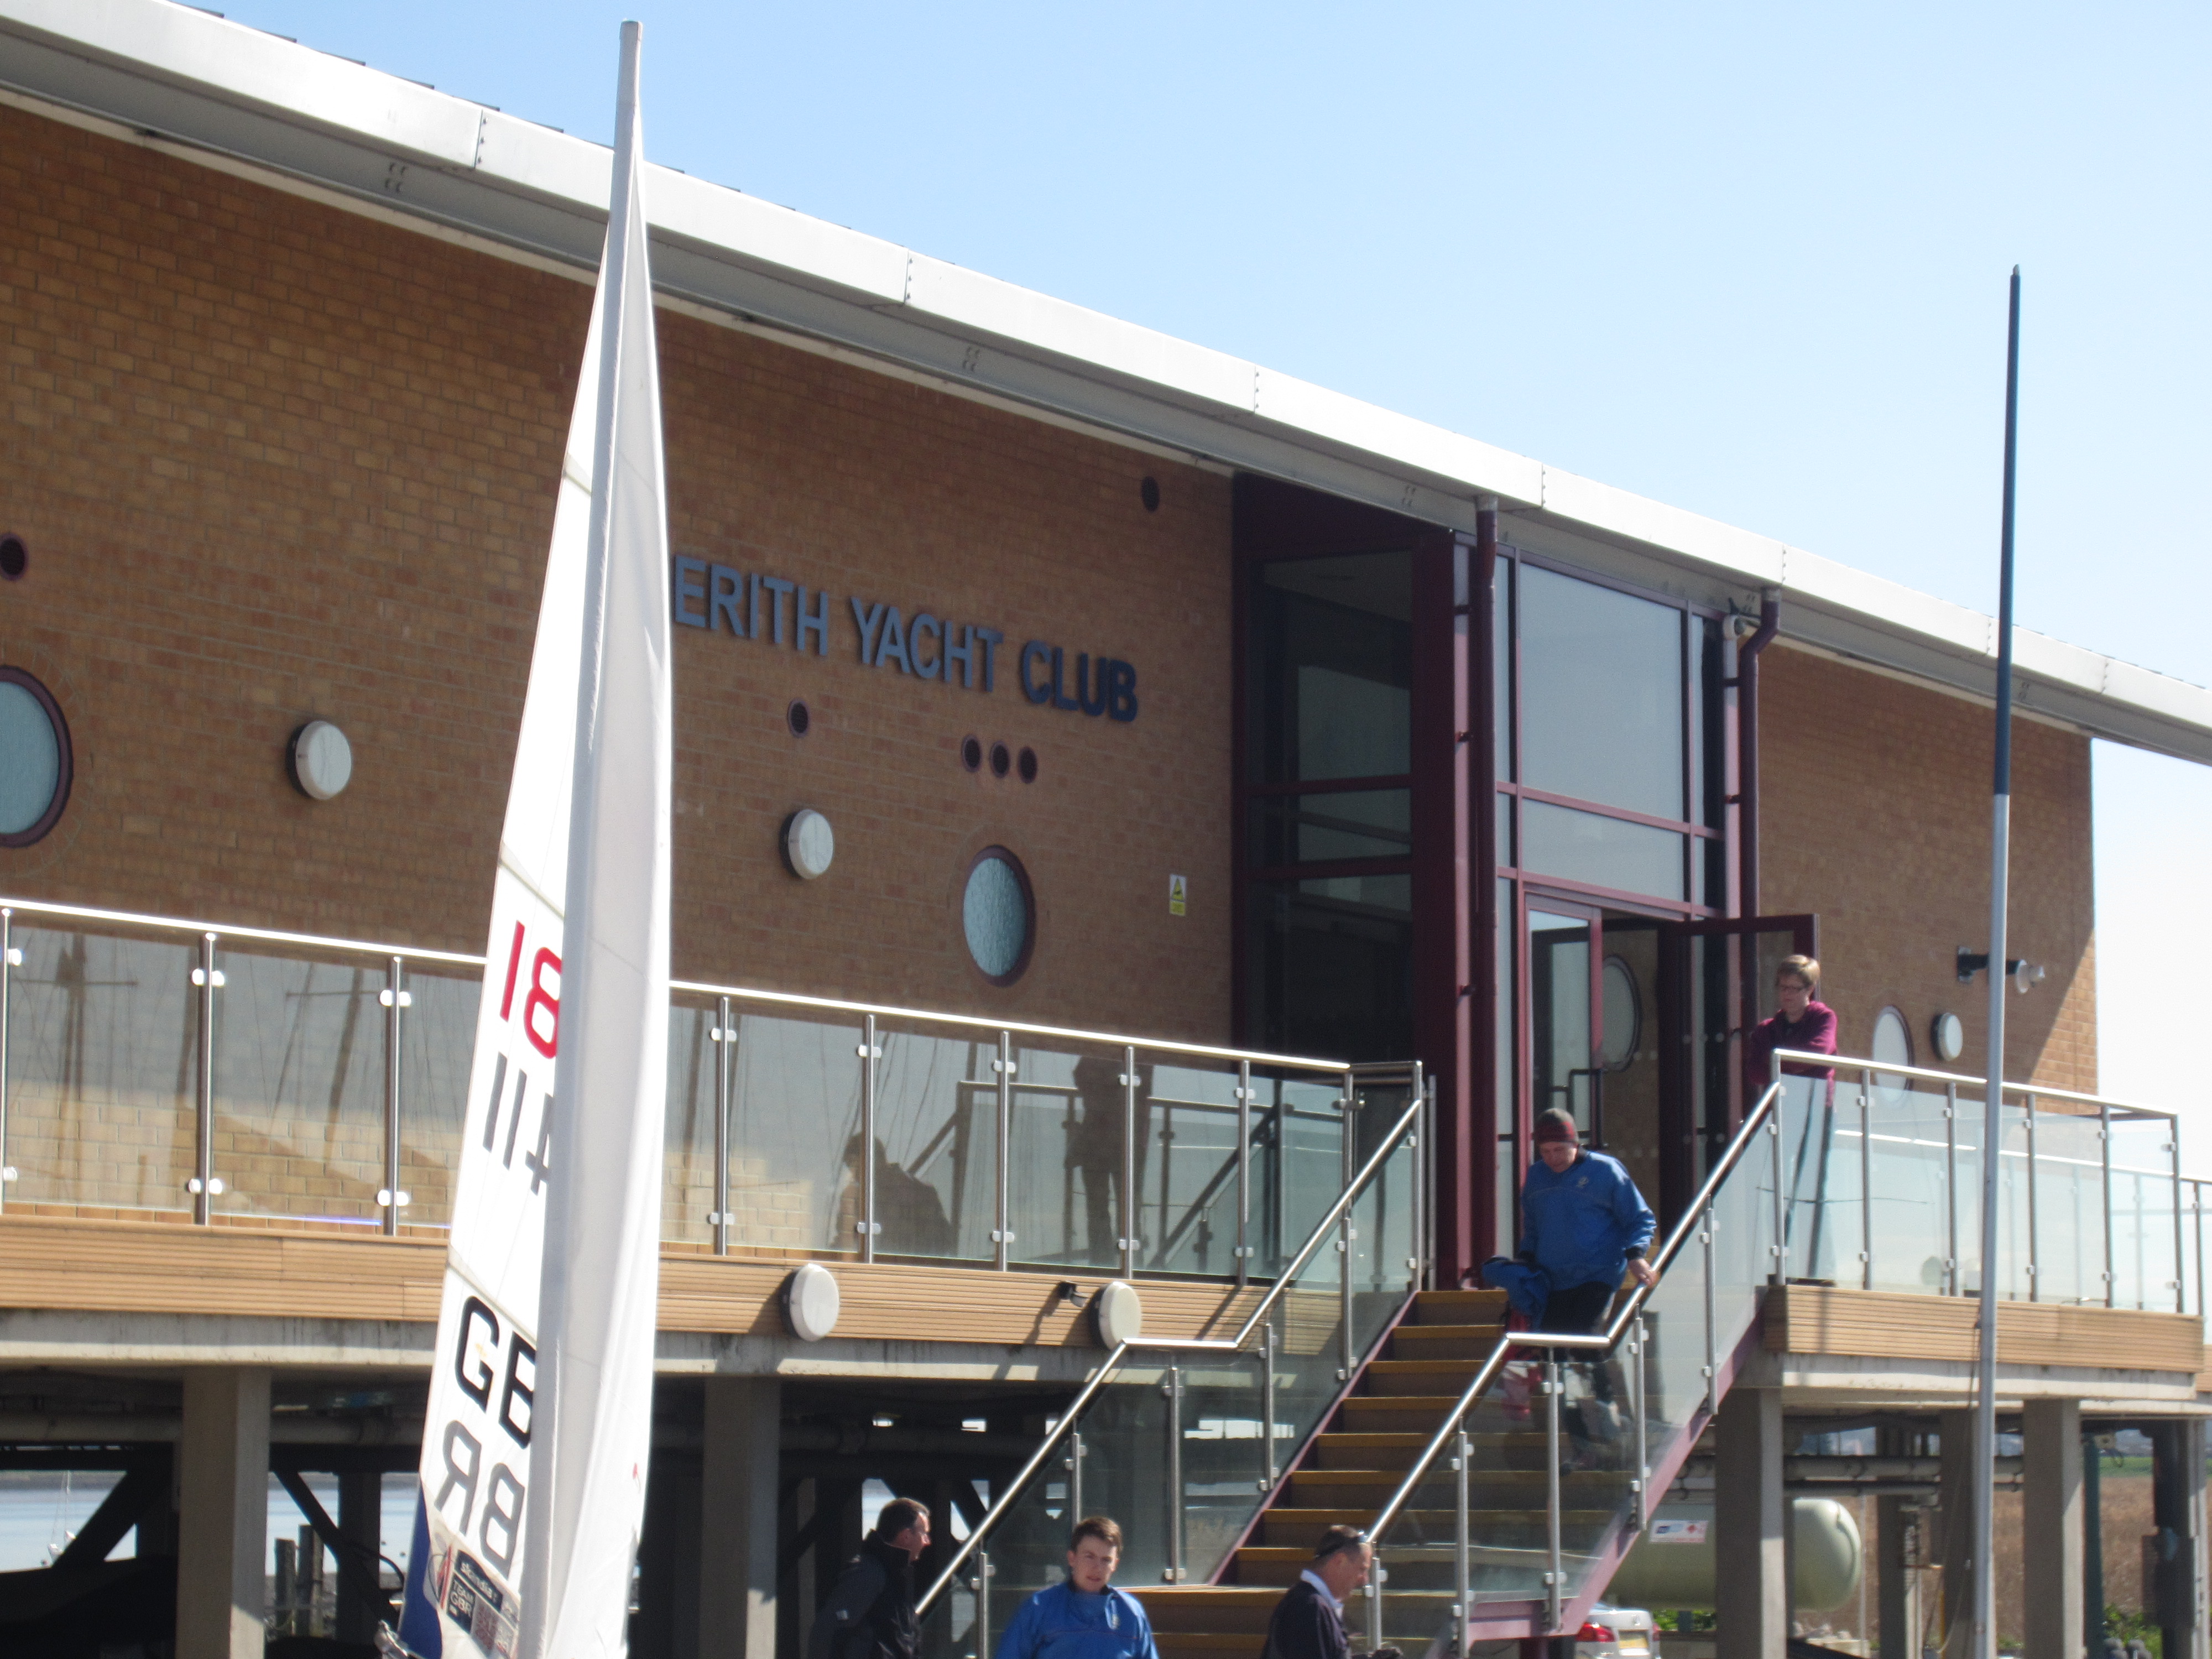 Erith Yacht Club